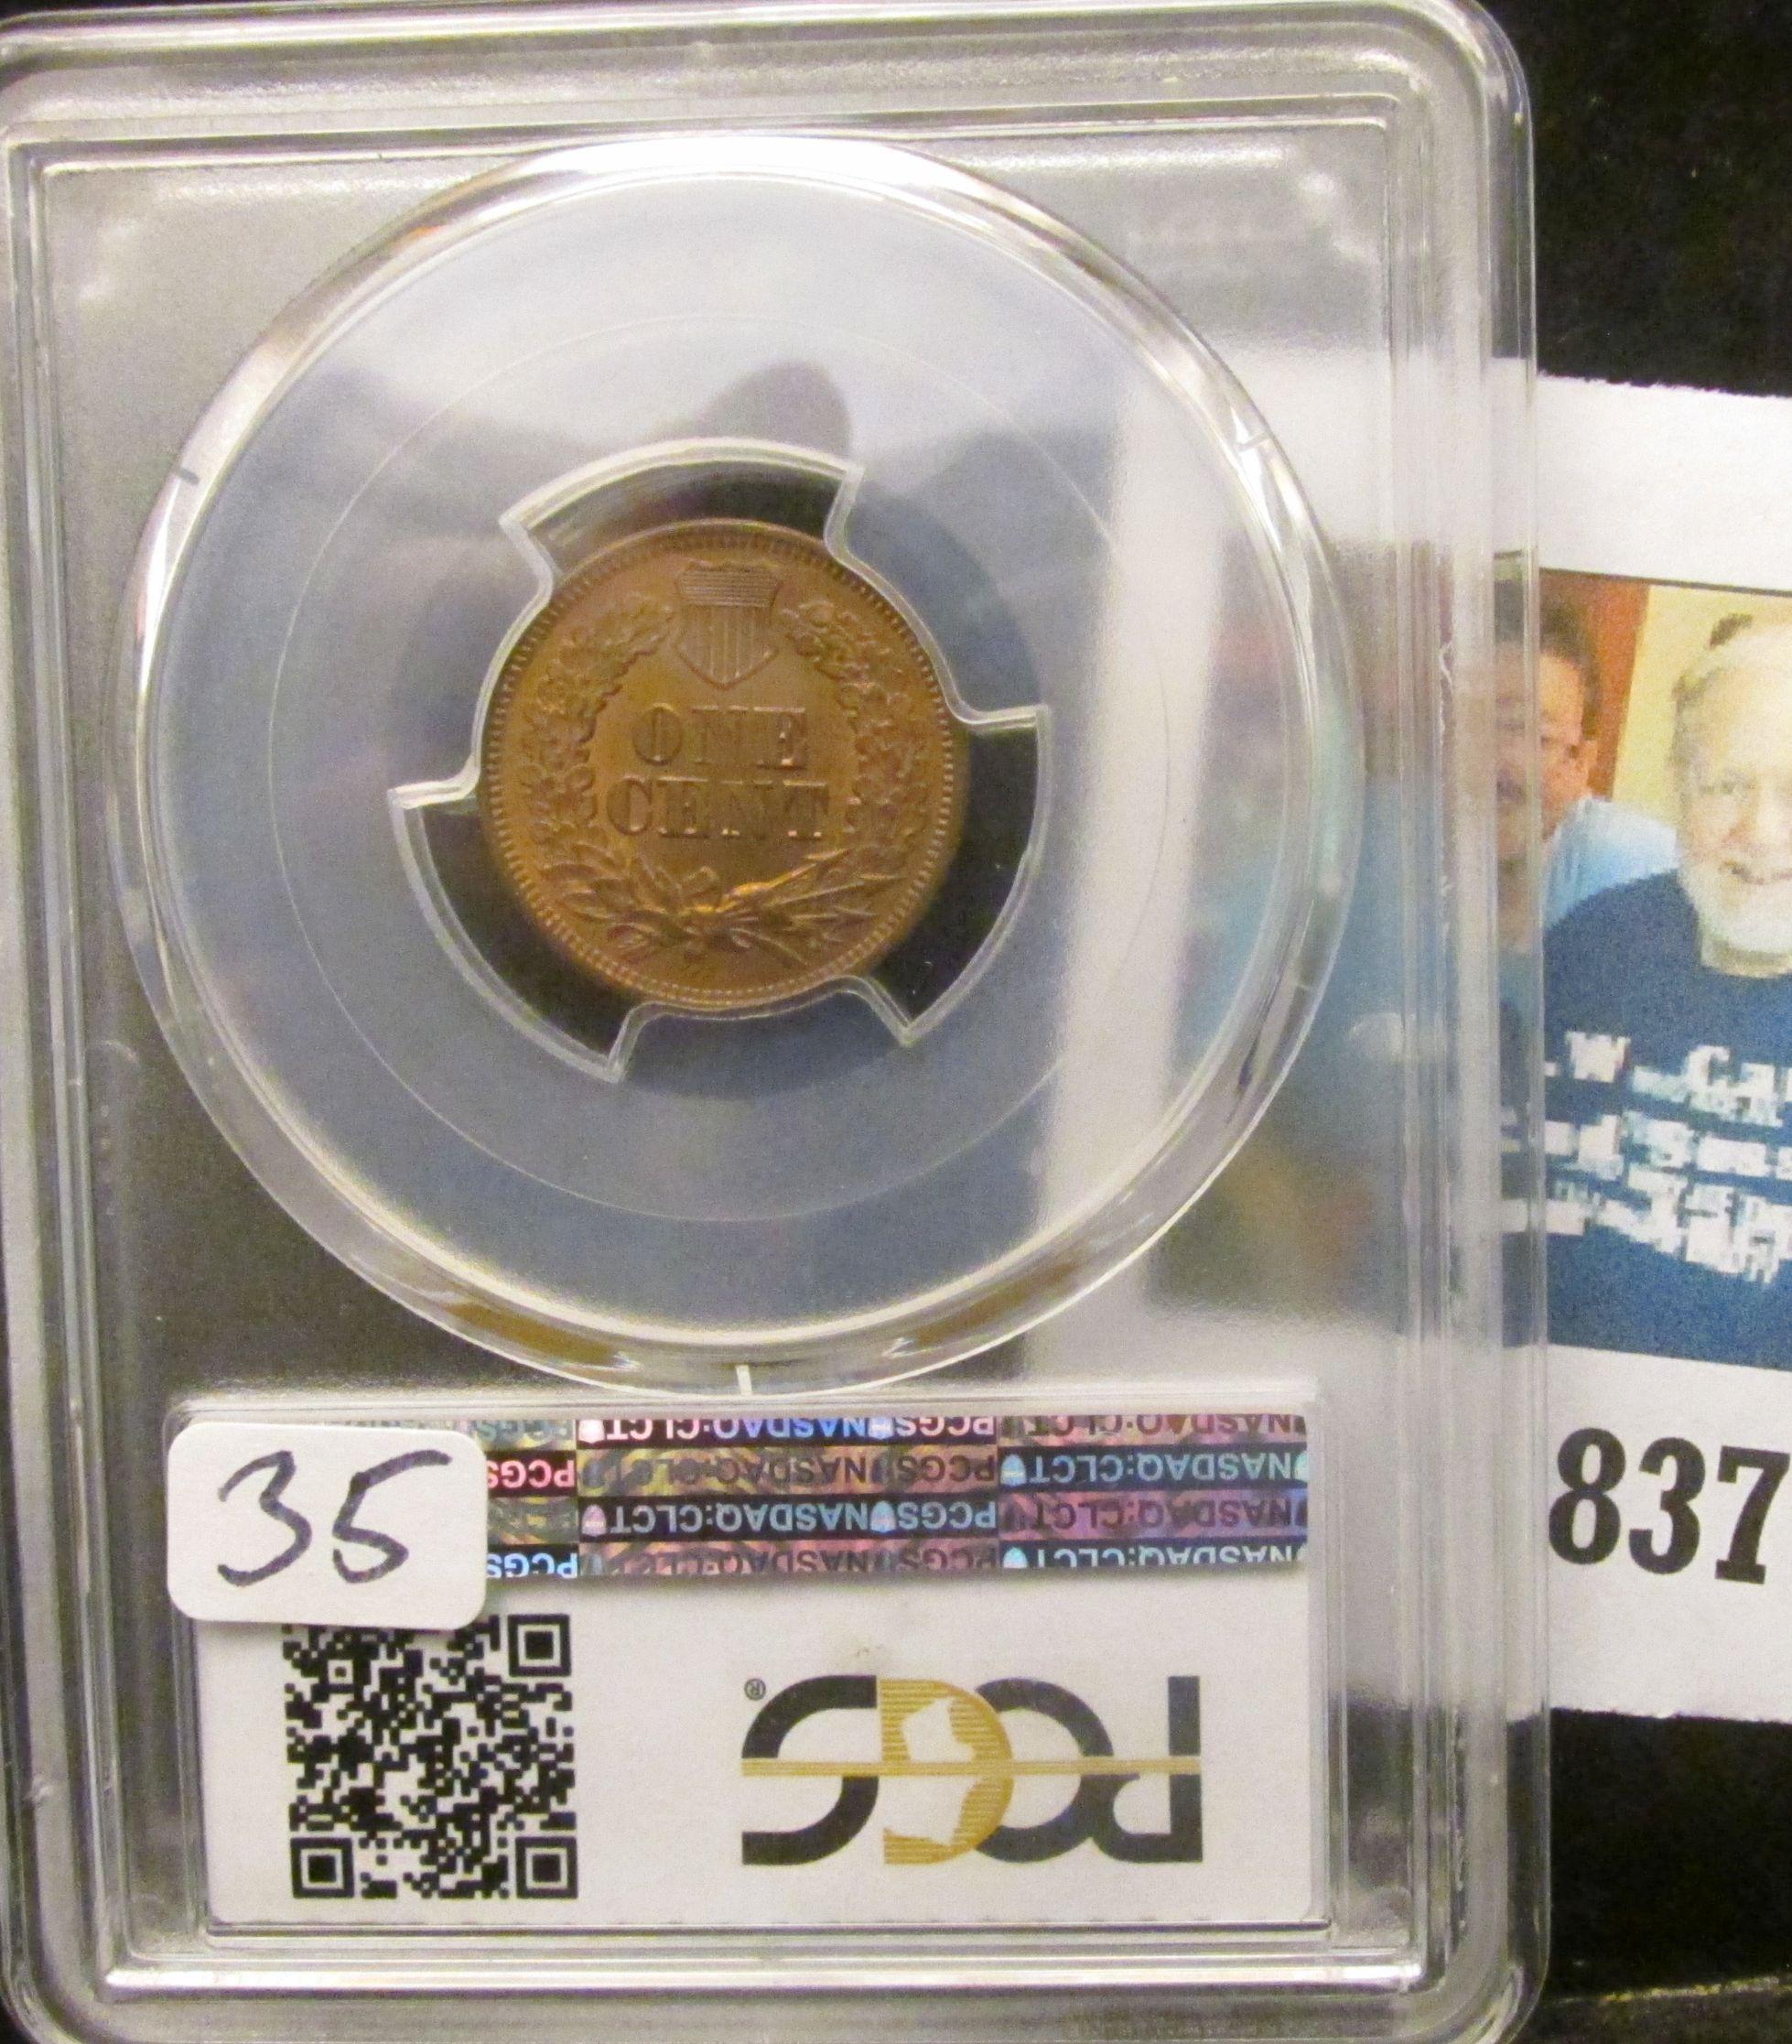 1869 U.S. Indian Head Cent PCGS slabbed "1869 1c PCGS MS64RB".